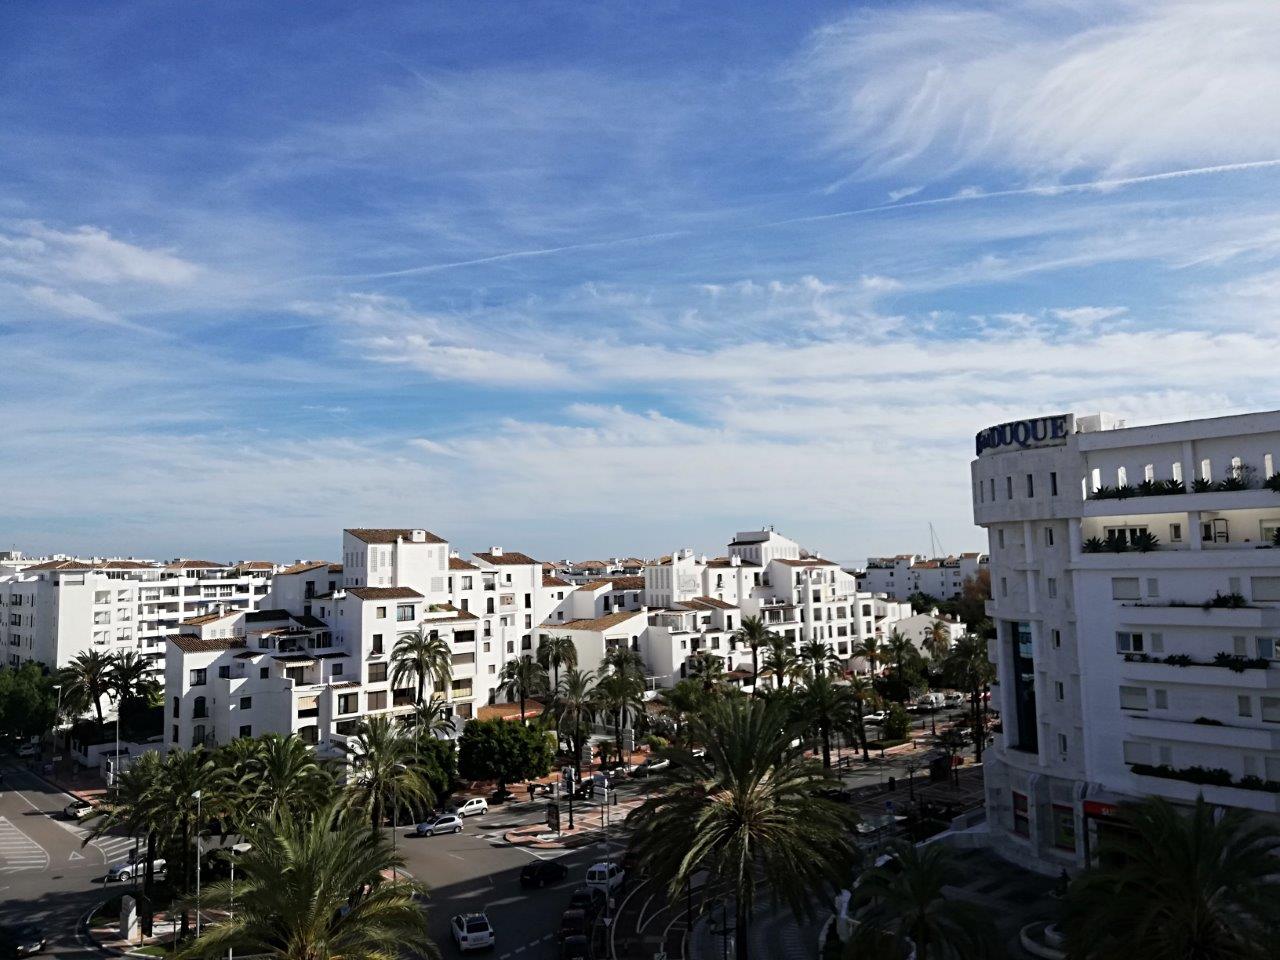 Penthouse alokairuan in Puerto Banús (Marbella)